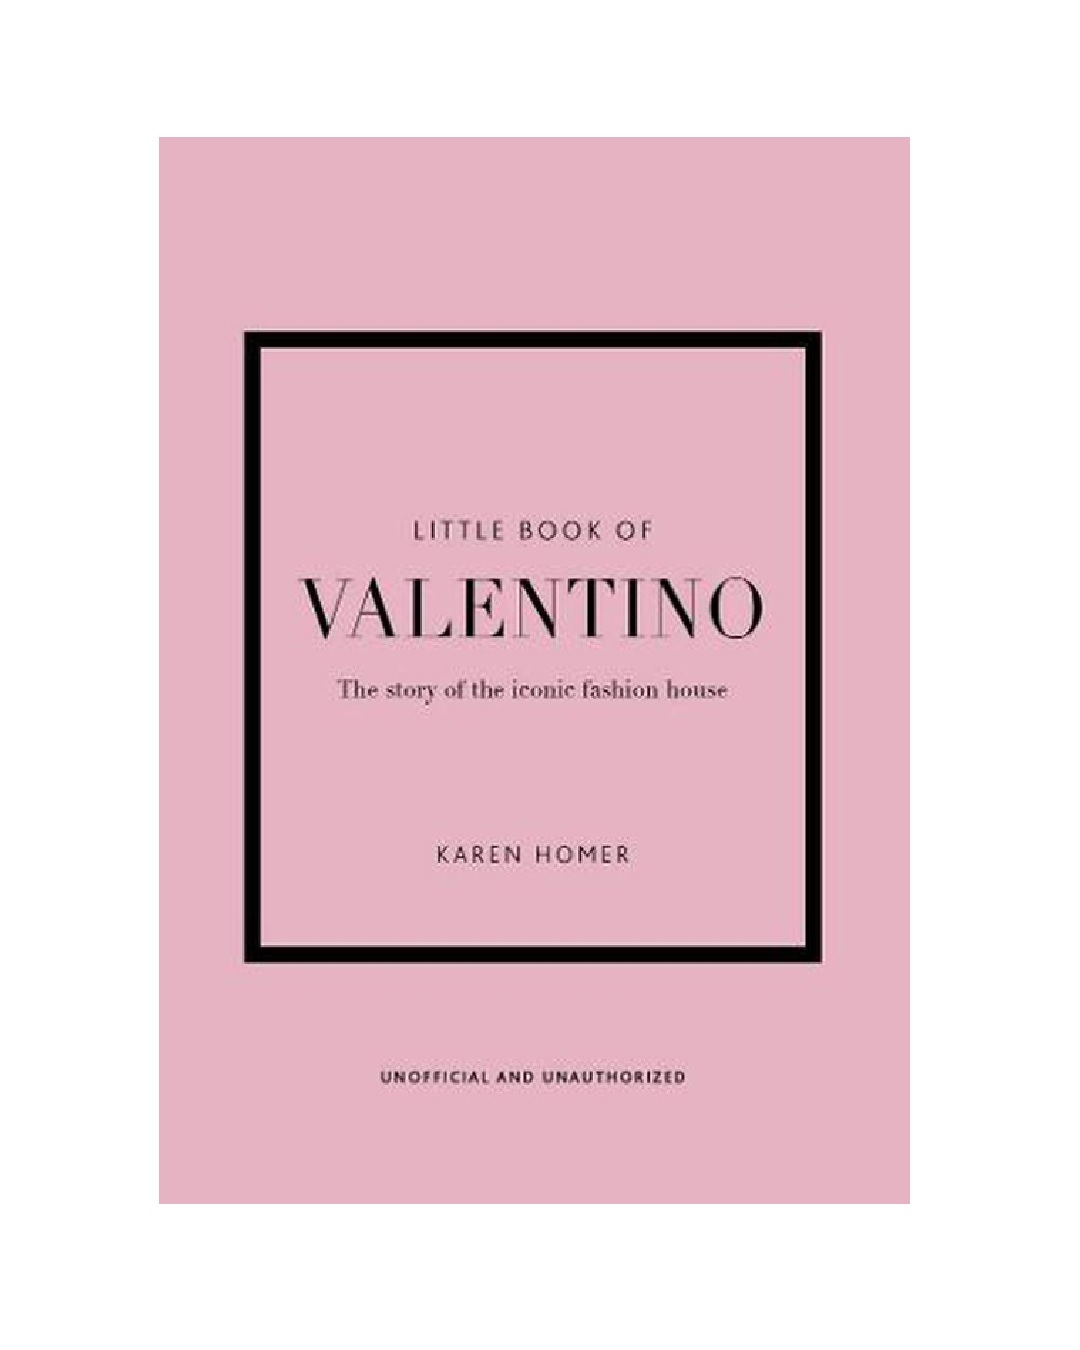 Little book of Valentino